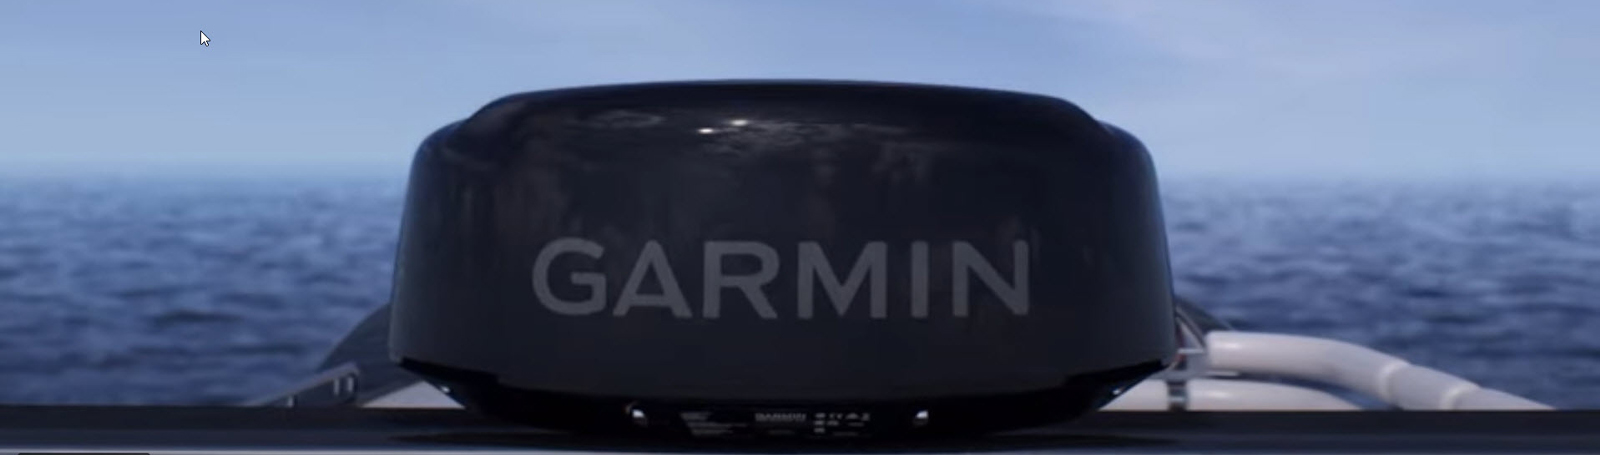 2-GMR-Fantom-Garmin-18x24x-Dome-Radar